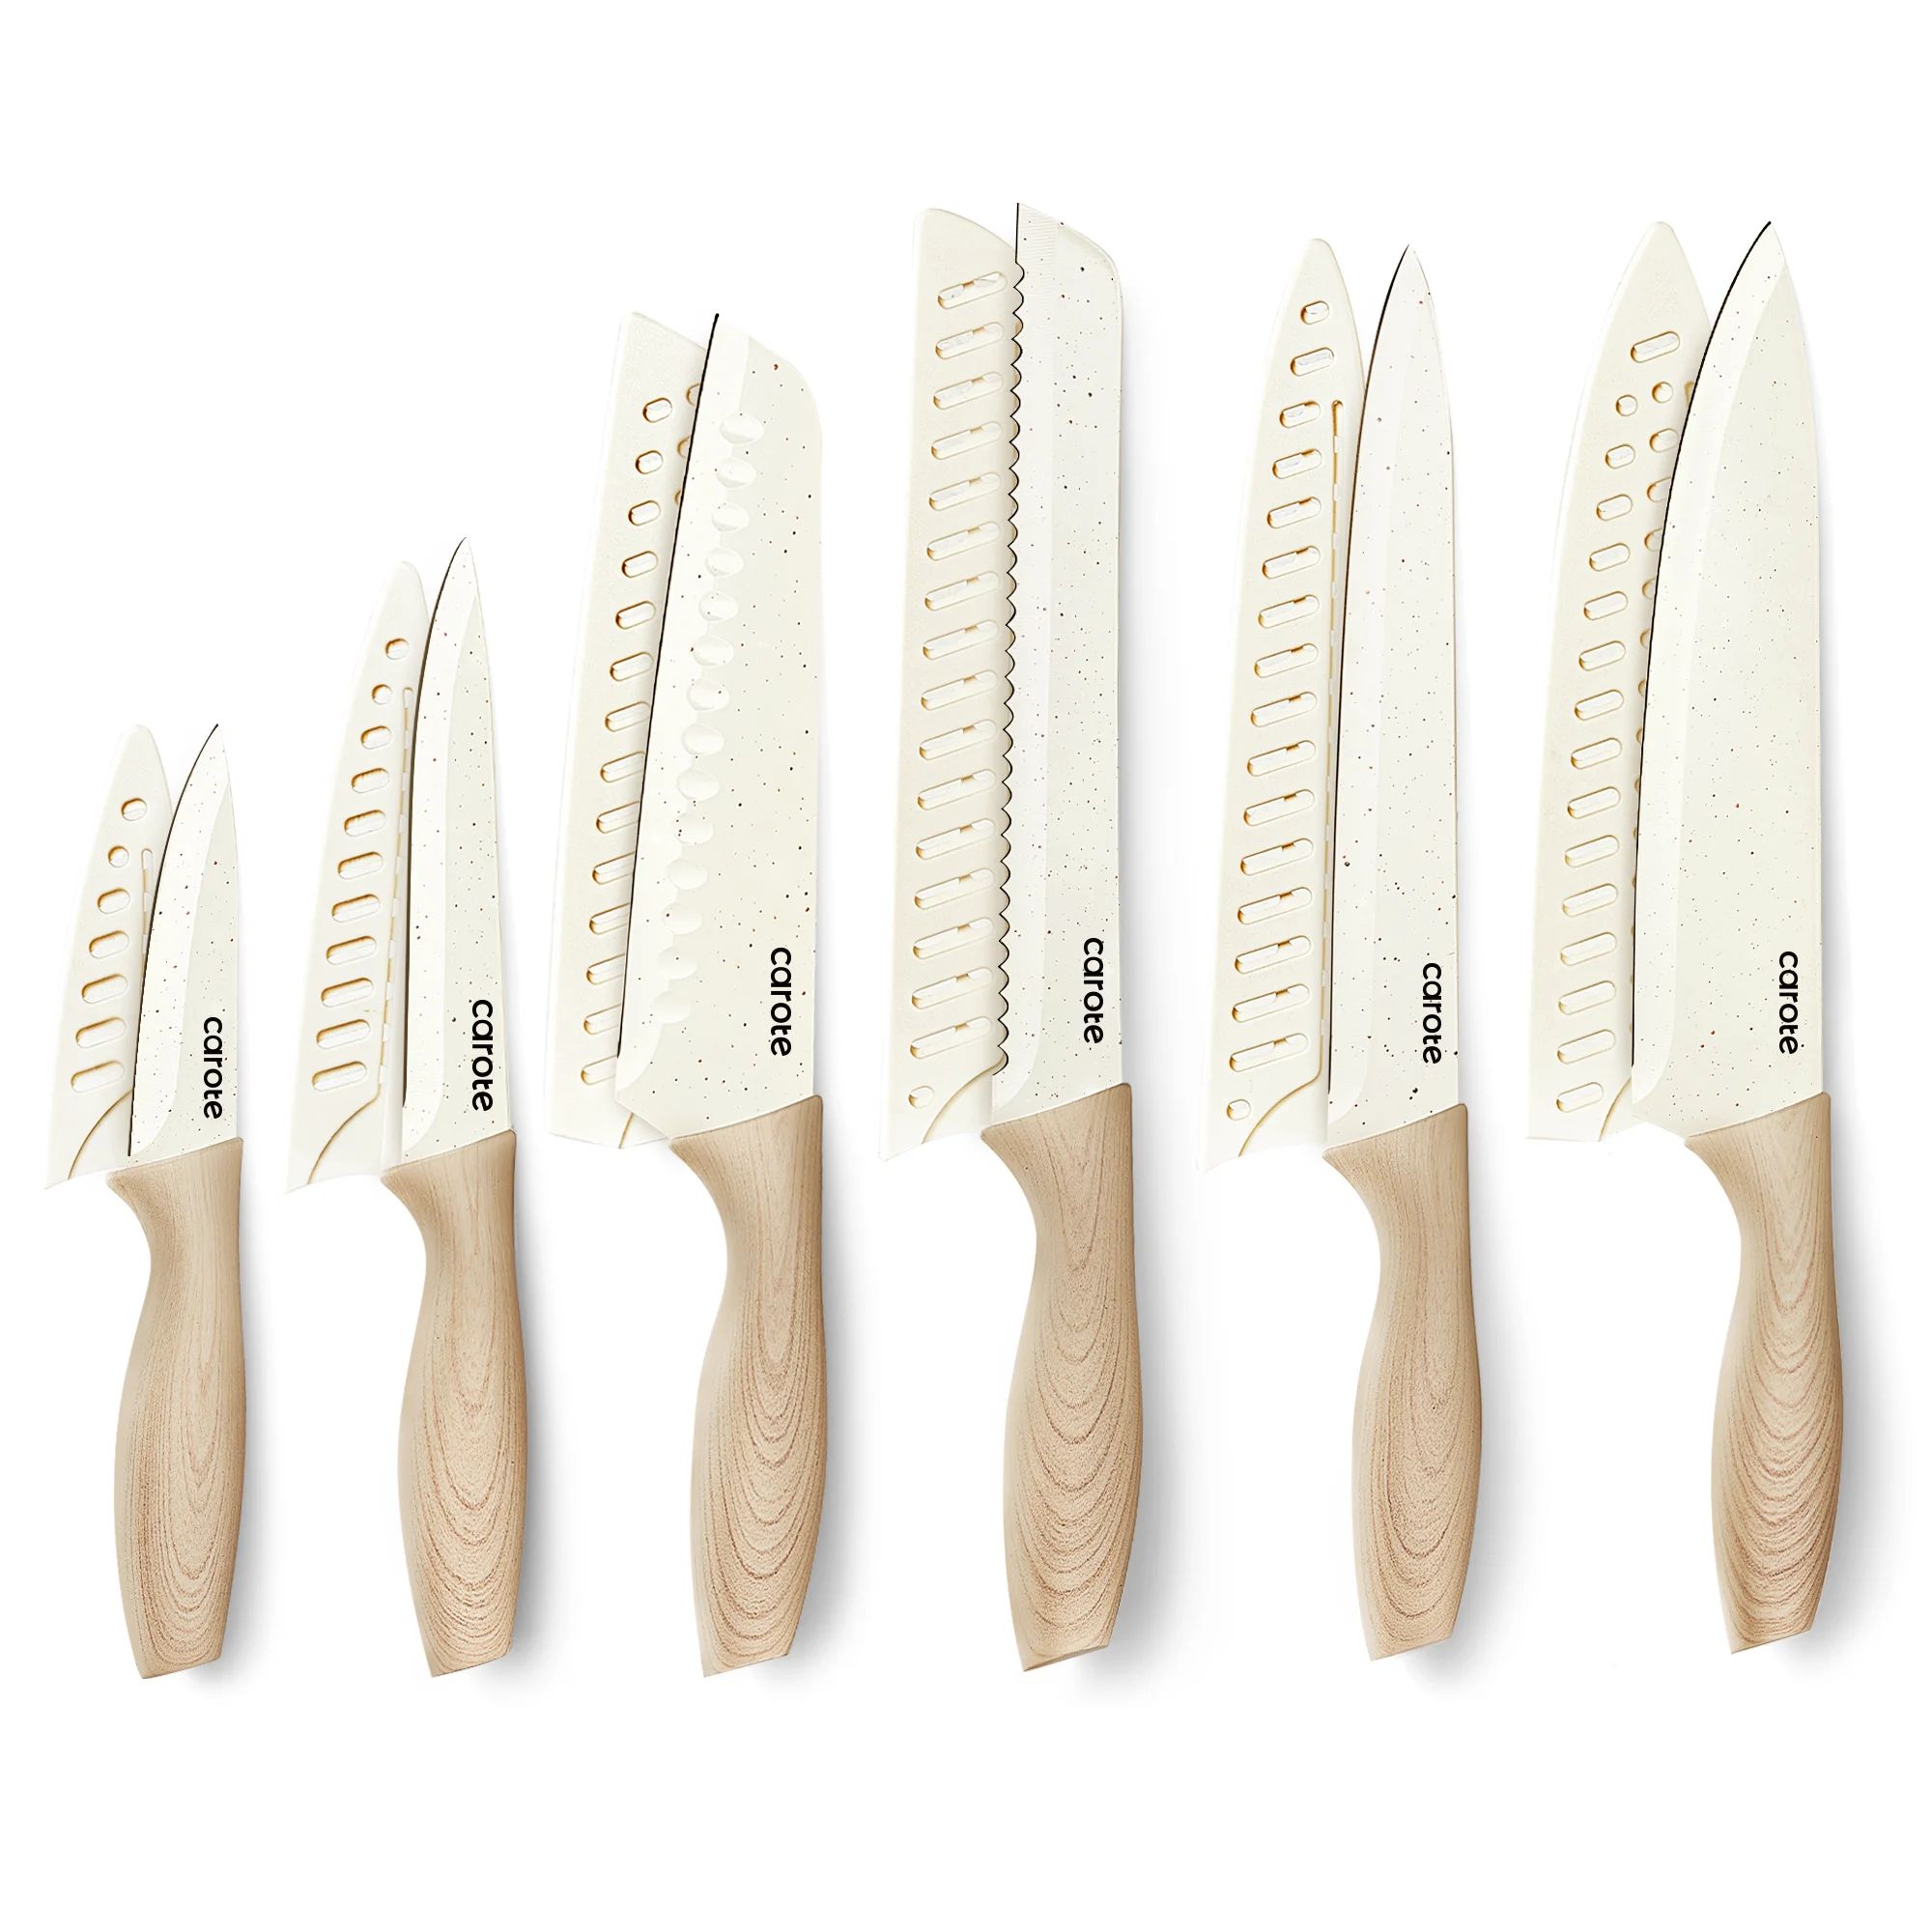 CAROTE 12PCS Knife set with Blade Guards,Granite Nonstick Ceramic Coating,Stainless Steel blade, ... | Walmart (US)